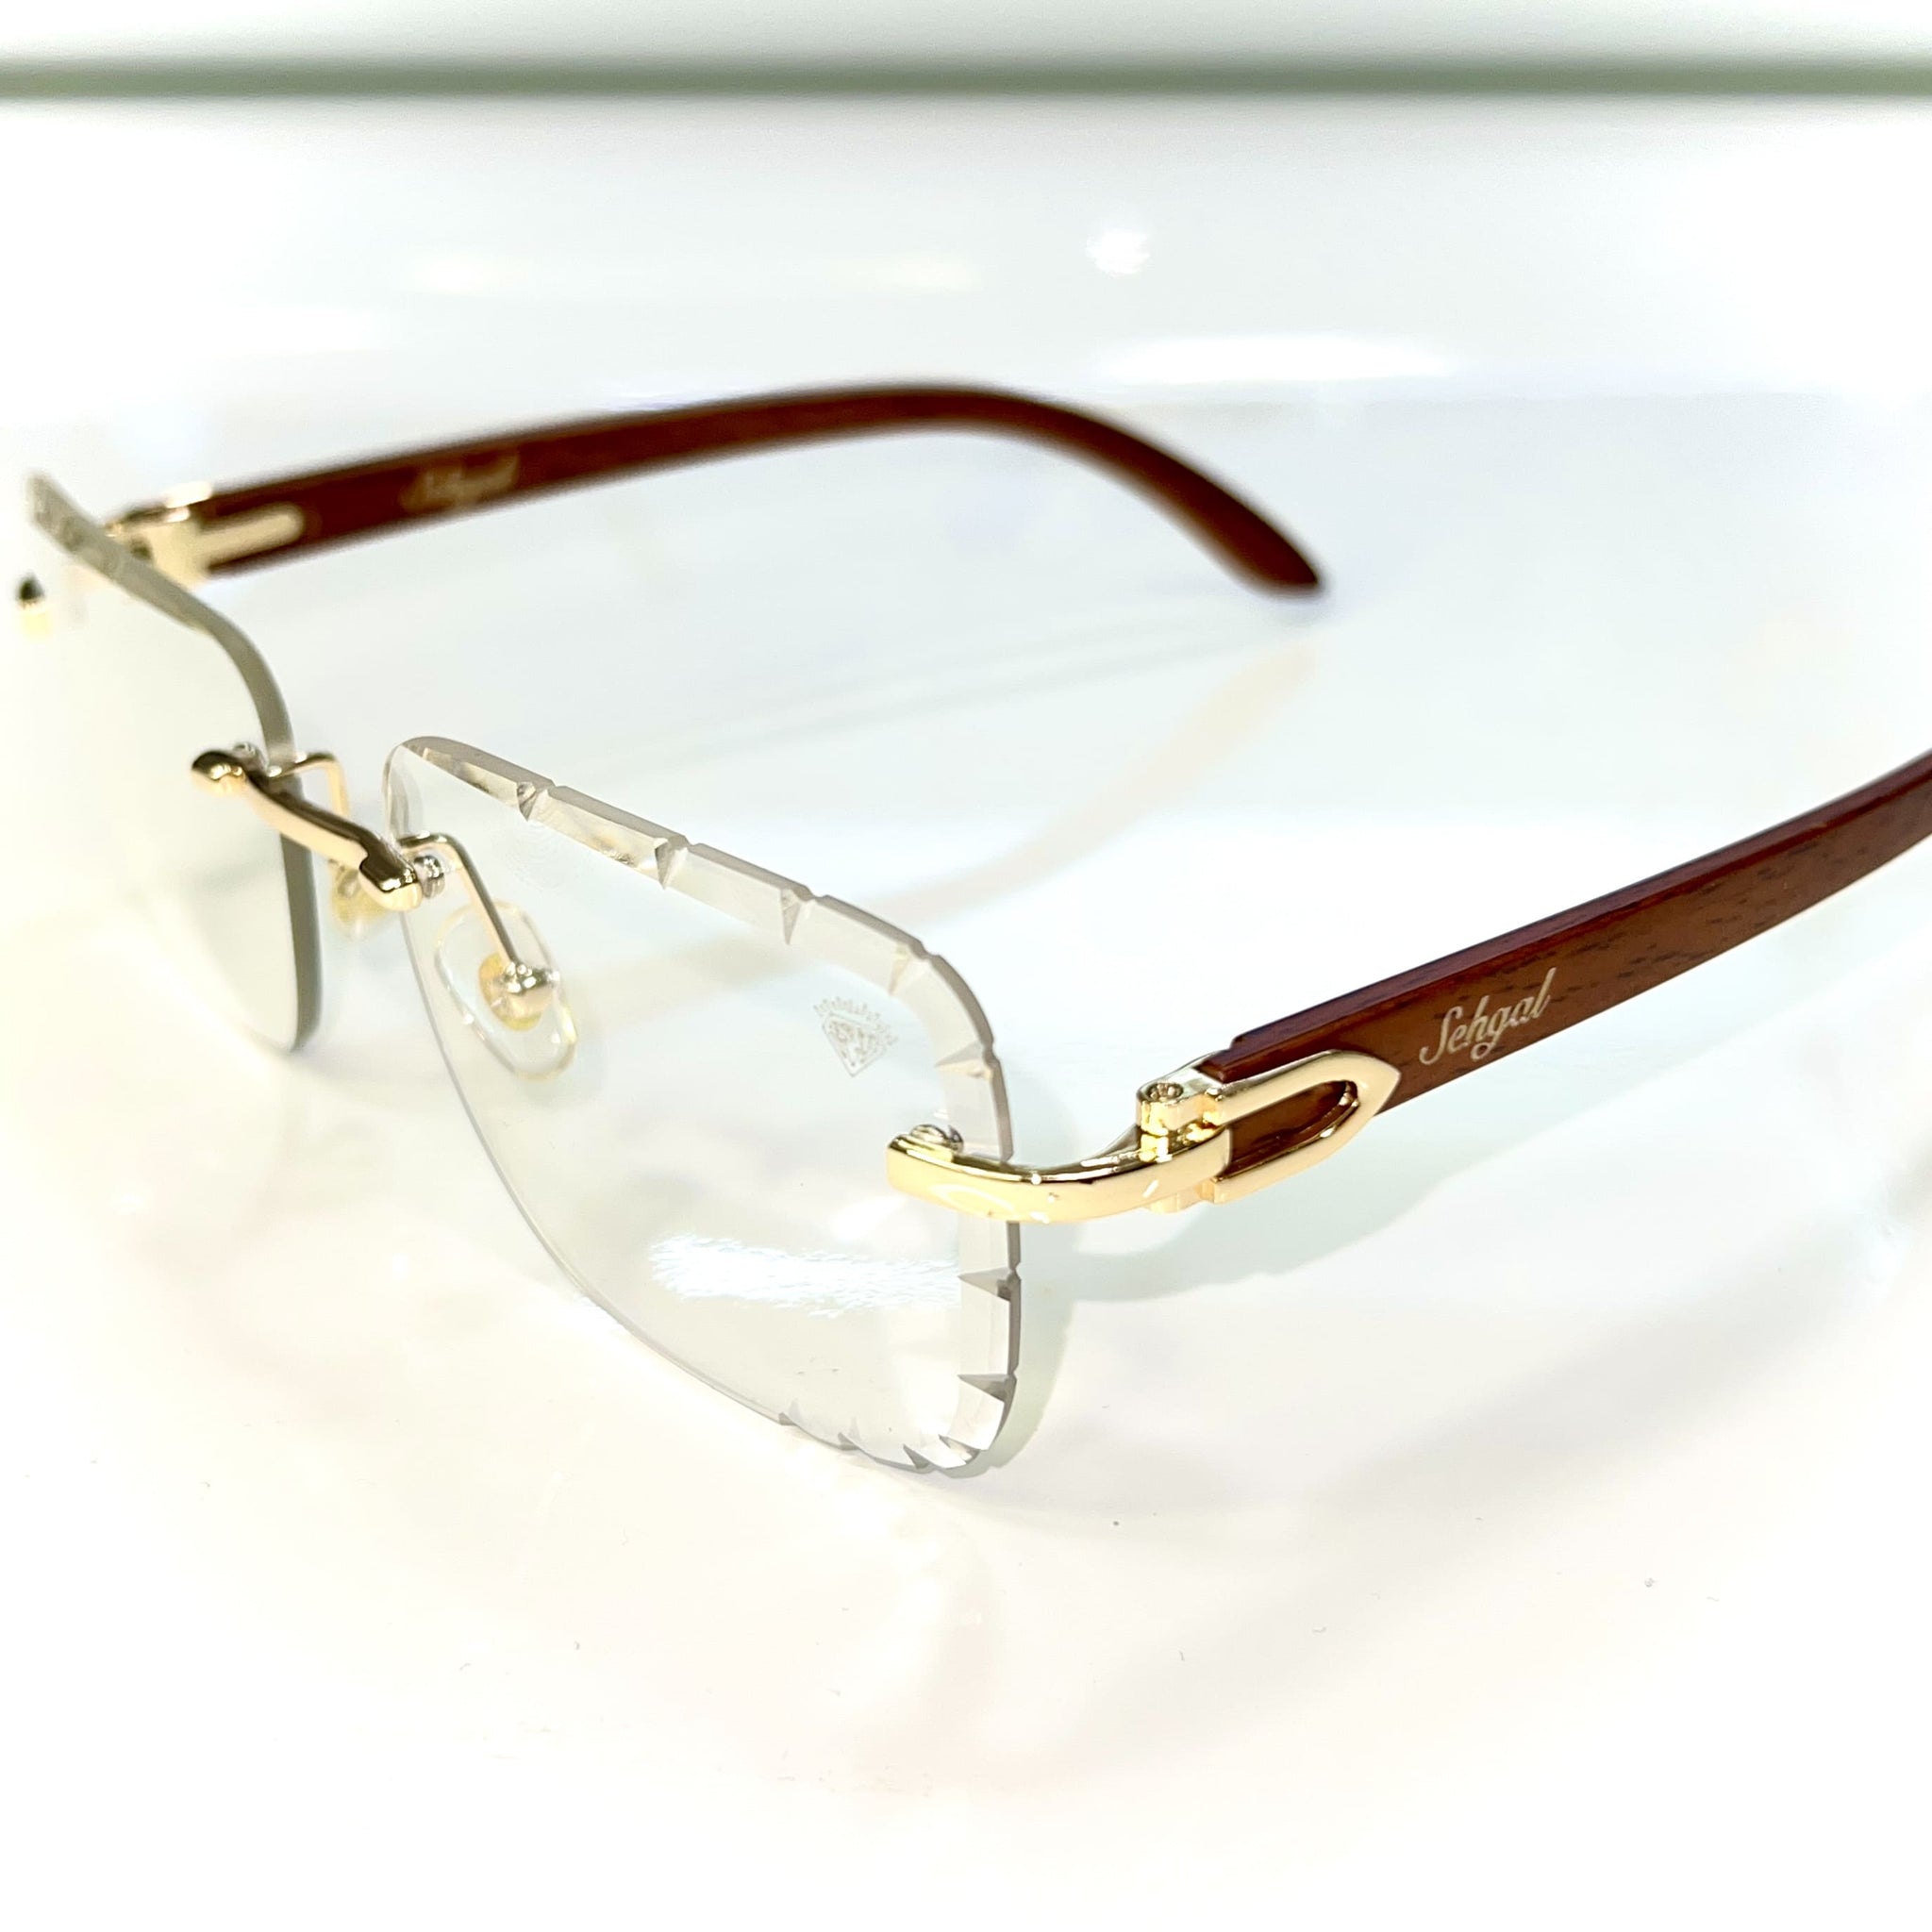 Woodcut 2.0 Glasses - Diamond cut / 14 carat gold plated / Woodgrain side - Transparent Shade - Sehgal Glasses